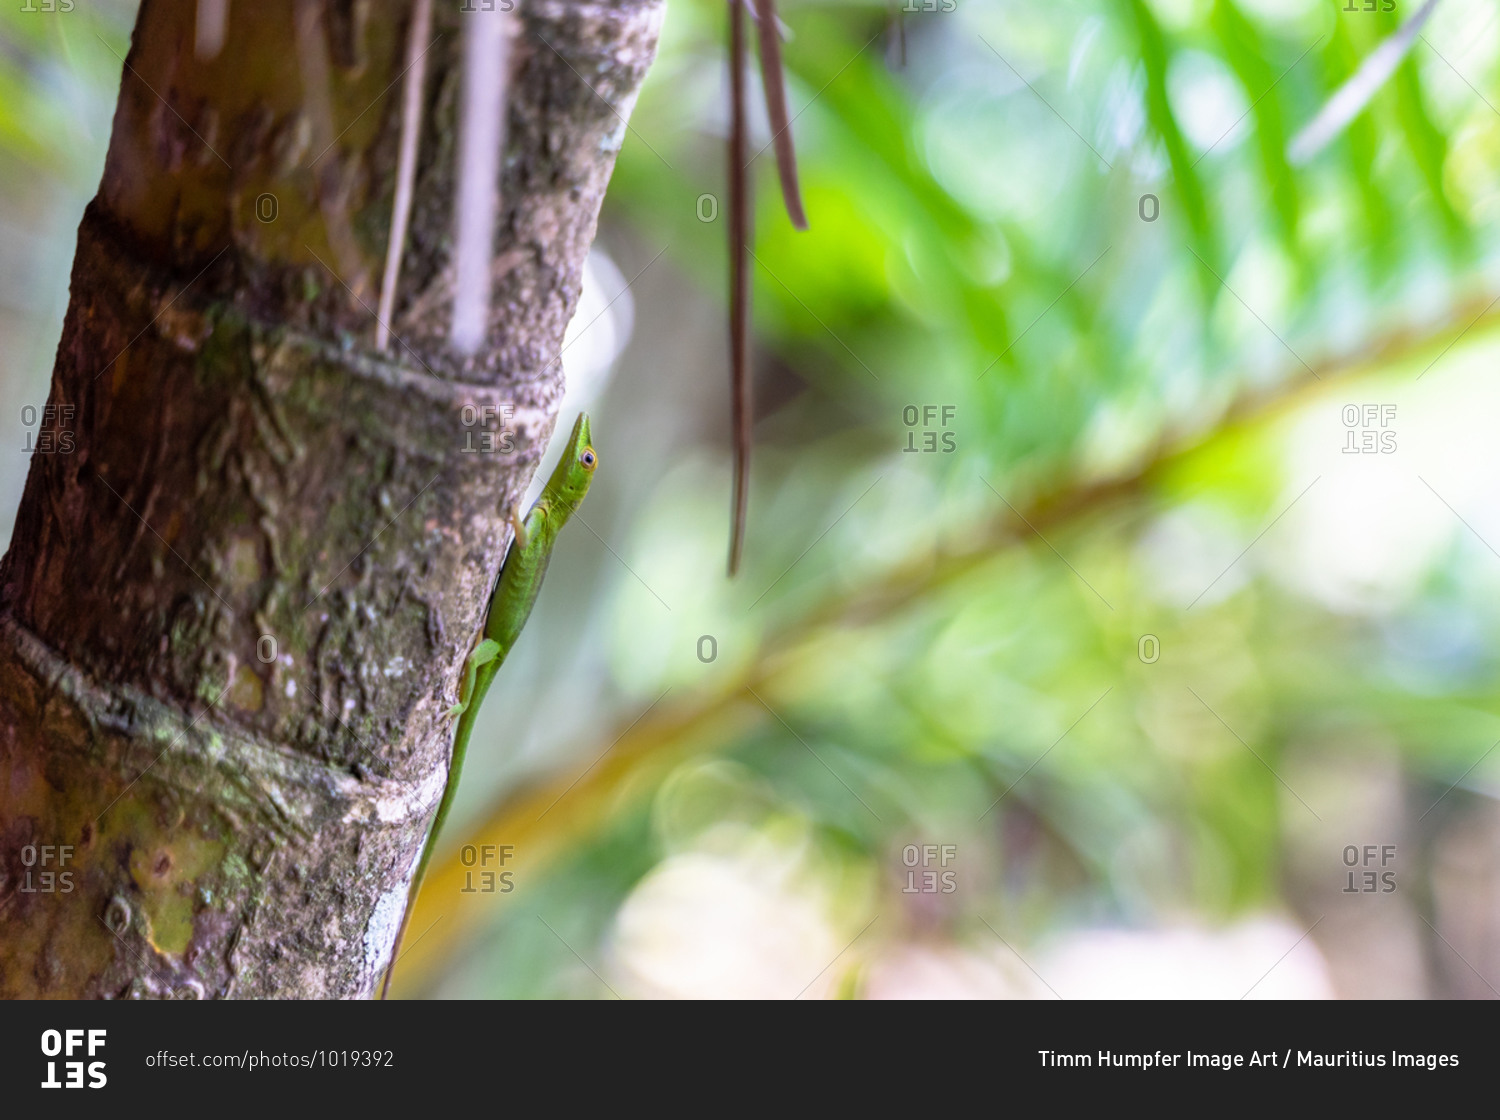 America, Caribbean, Greater Antilles, Dominican Republic, Samana, Las Terrenas, lizard on a tree trunk